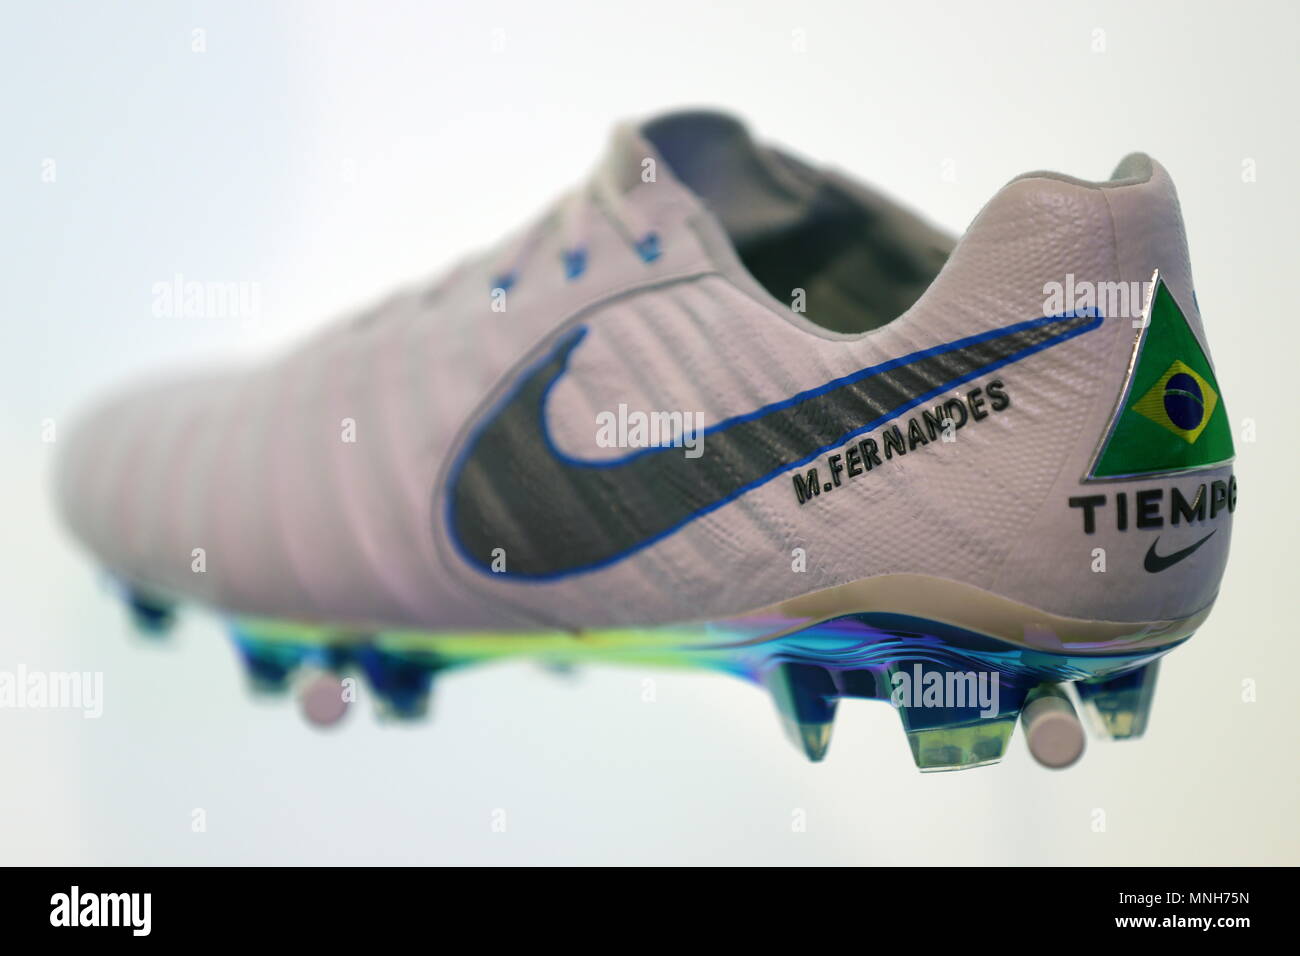 Nike Soccer Boots Fotos e Imágenes de stock - Alamy